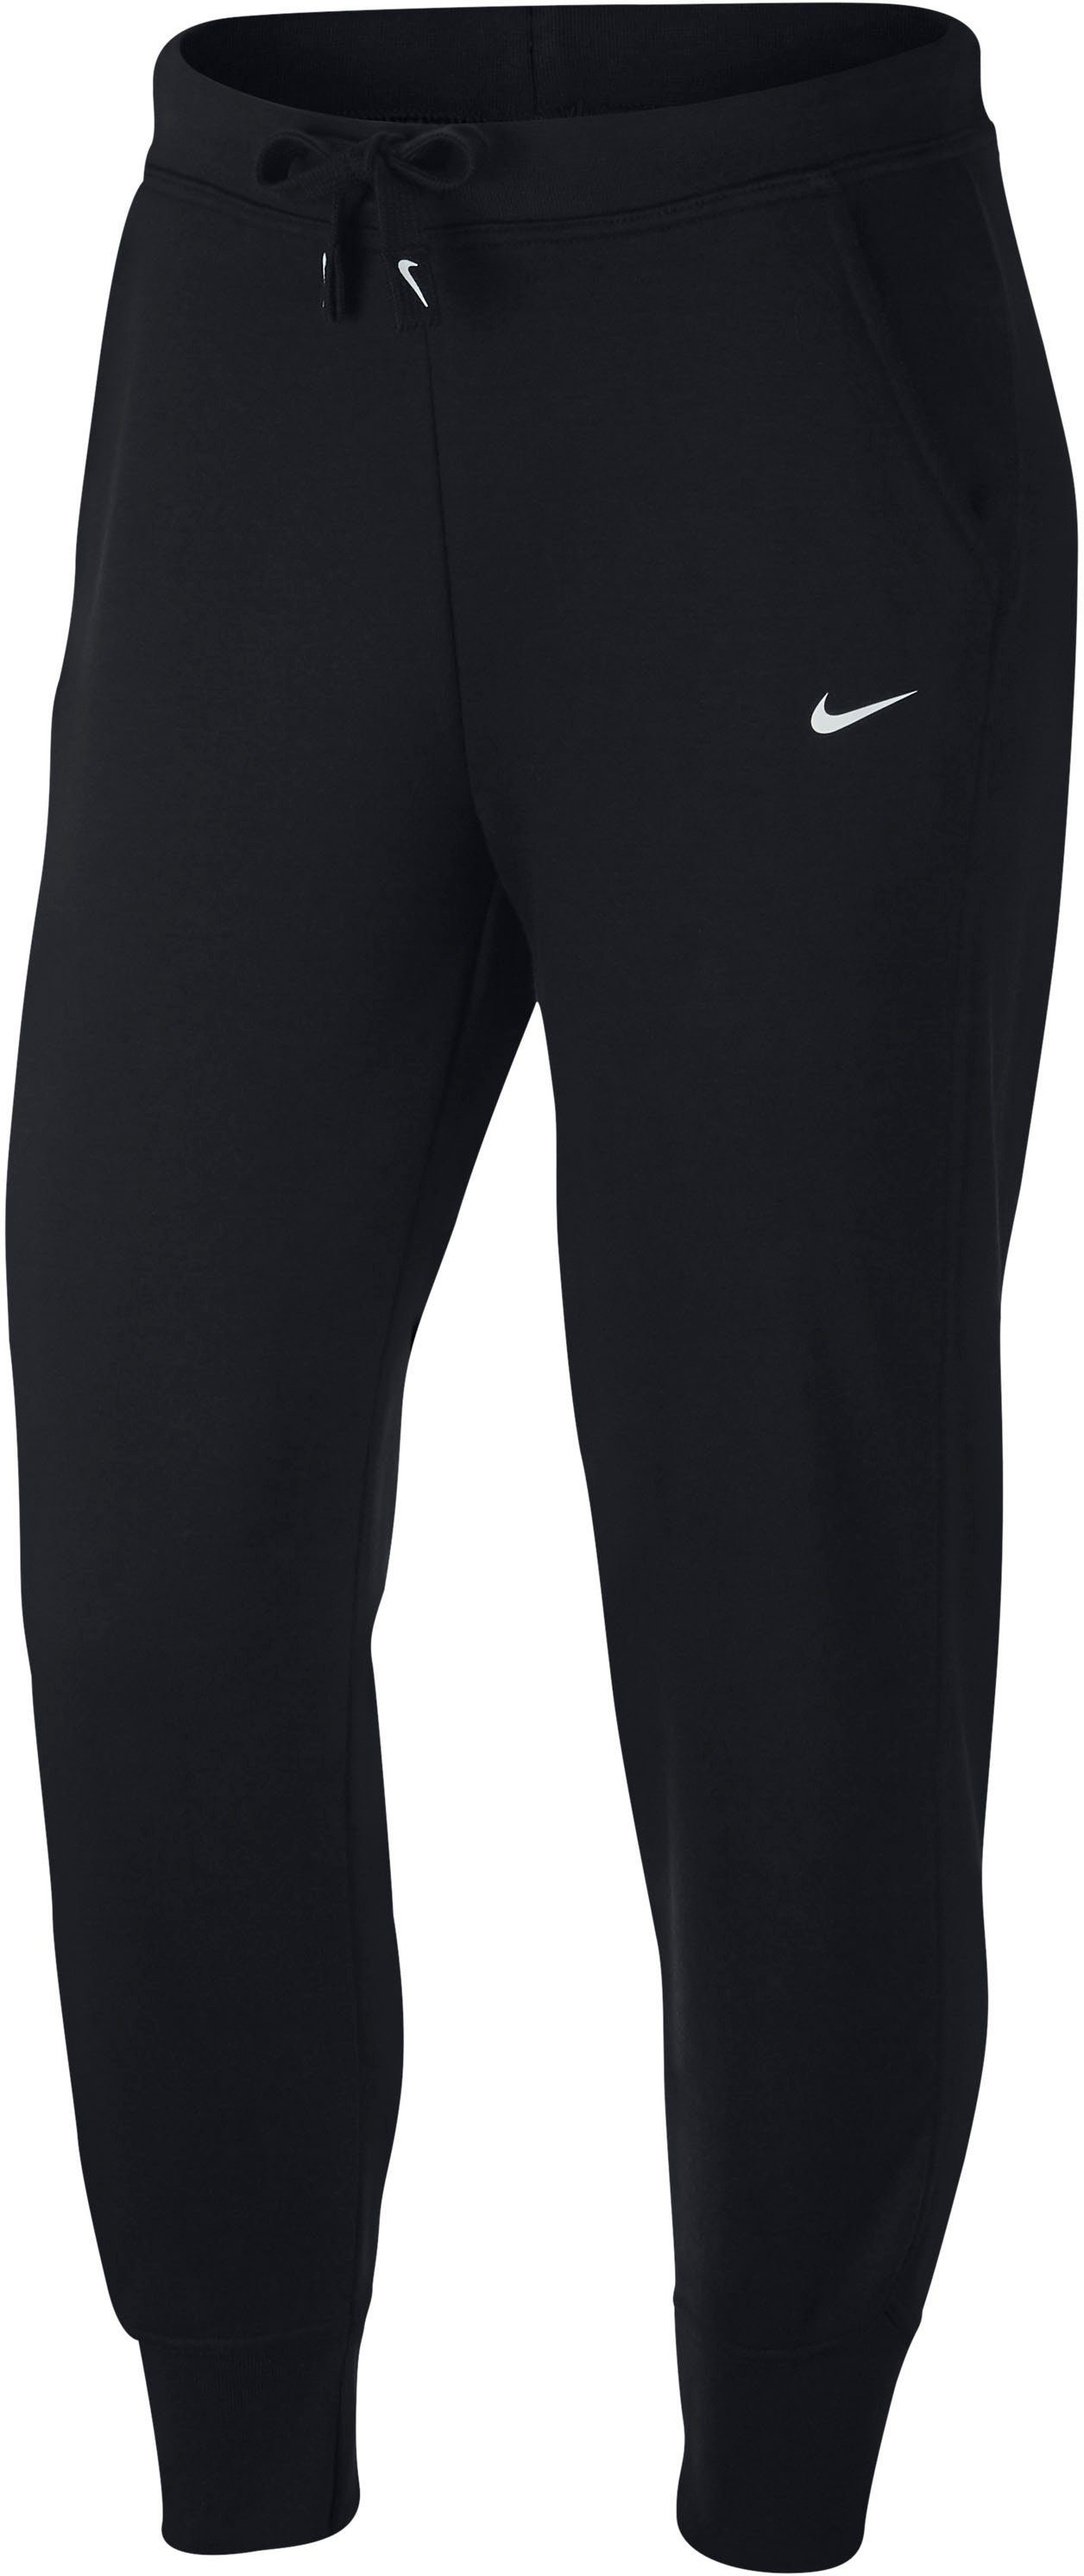 Trainingshose Nike Women's Training Fit Pants Dri-fit Get